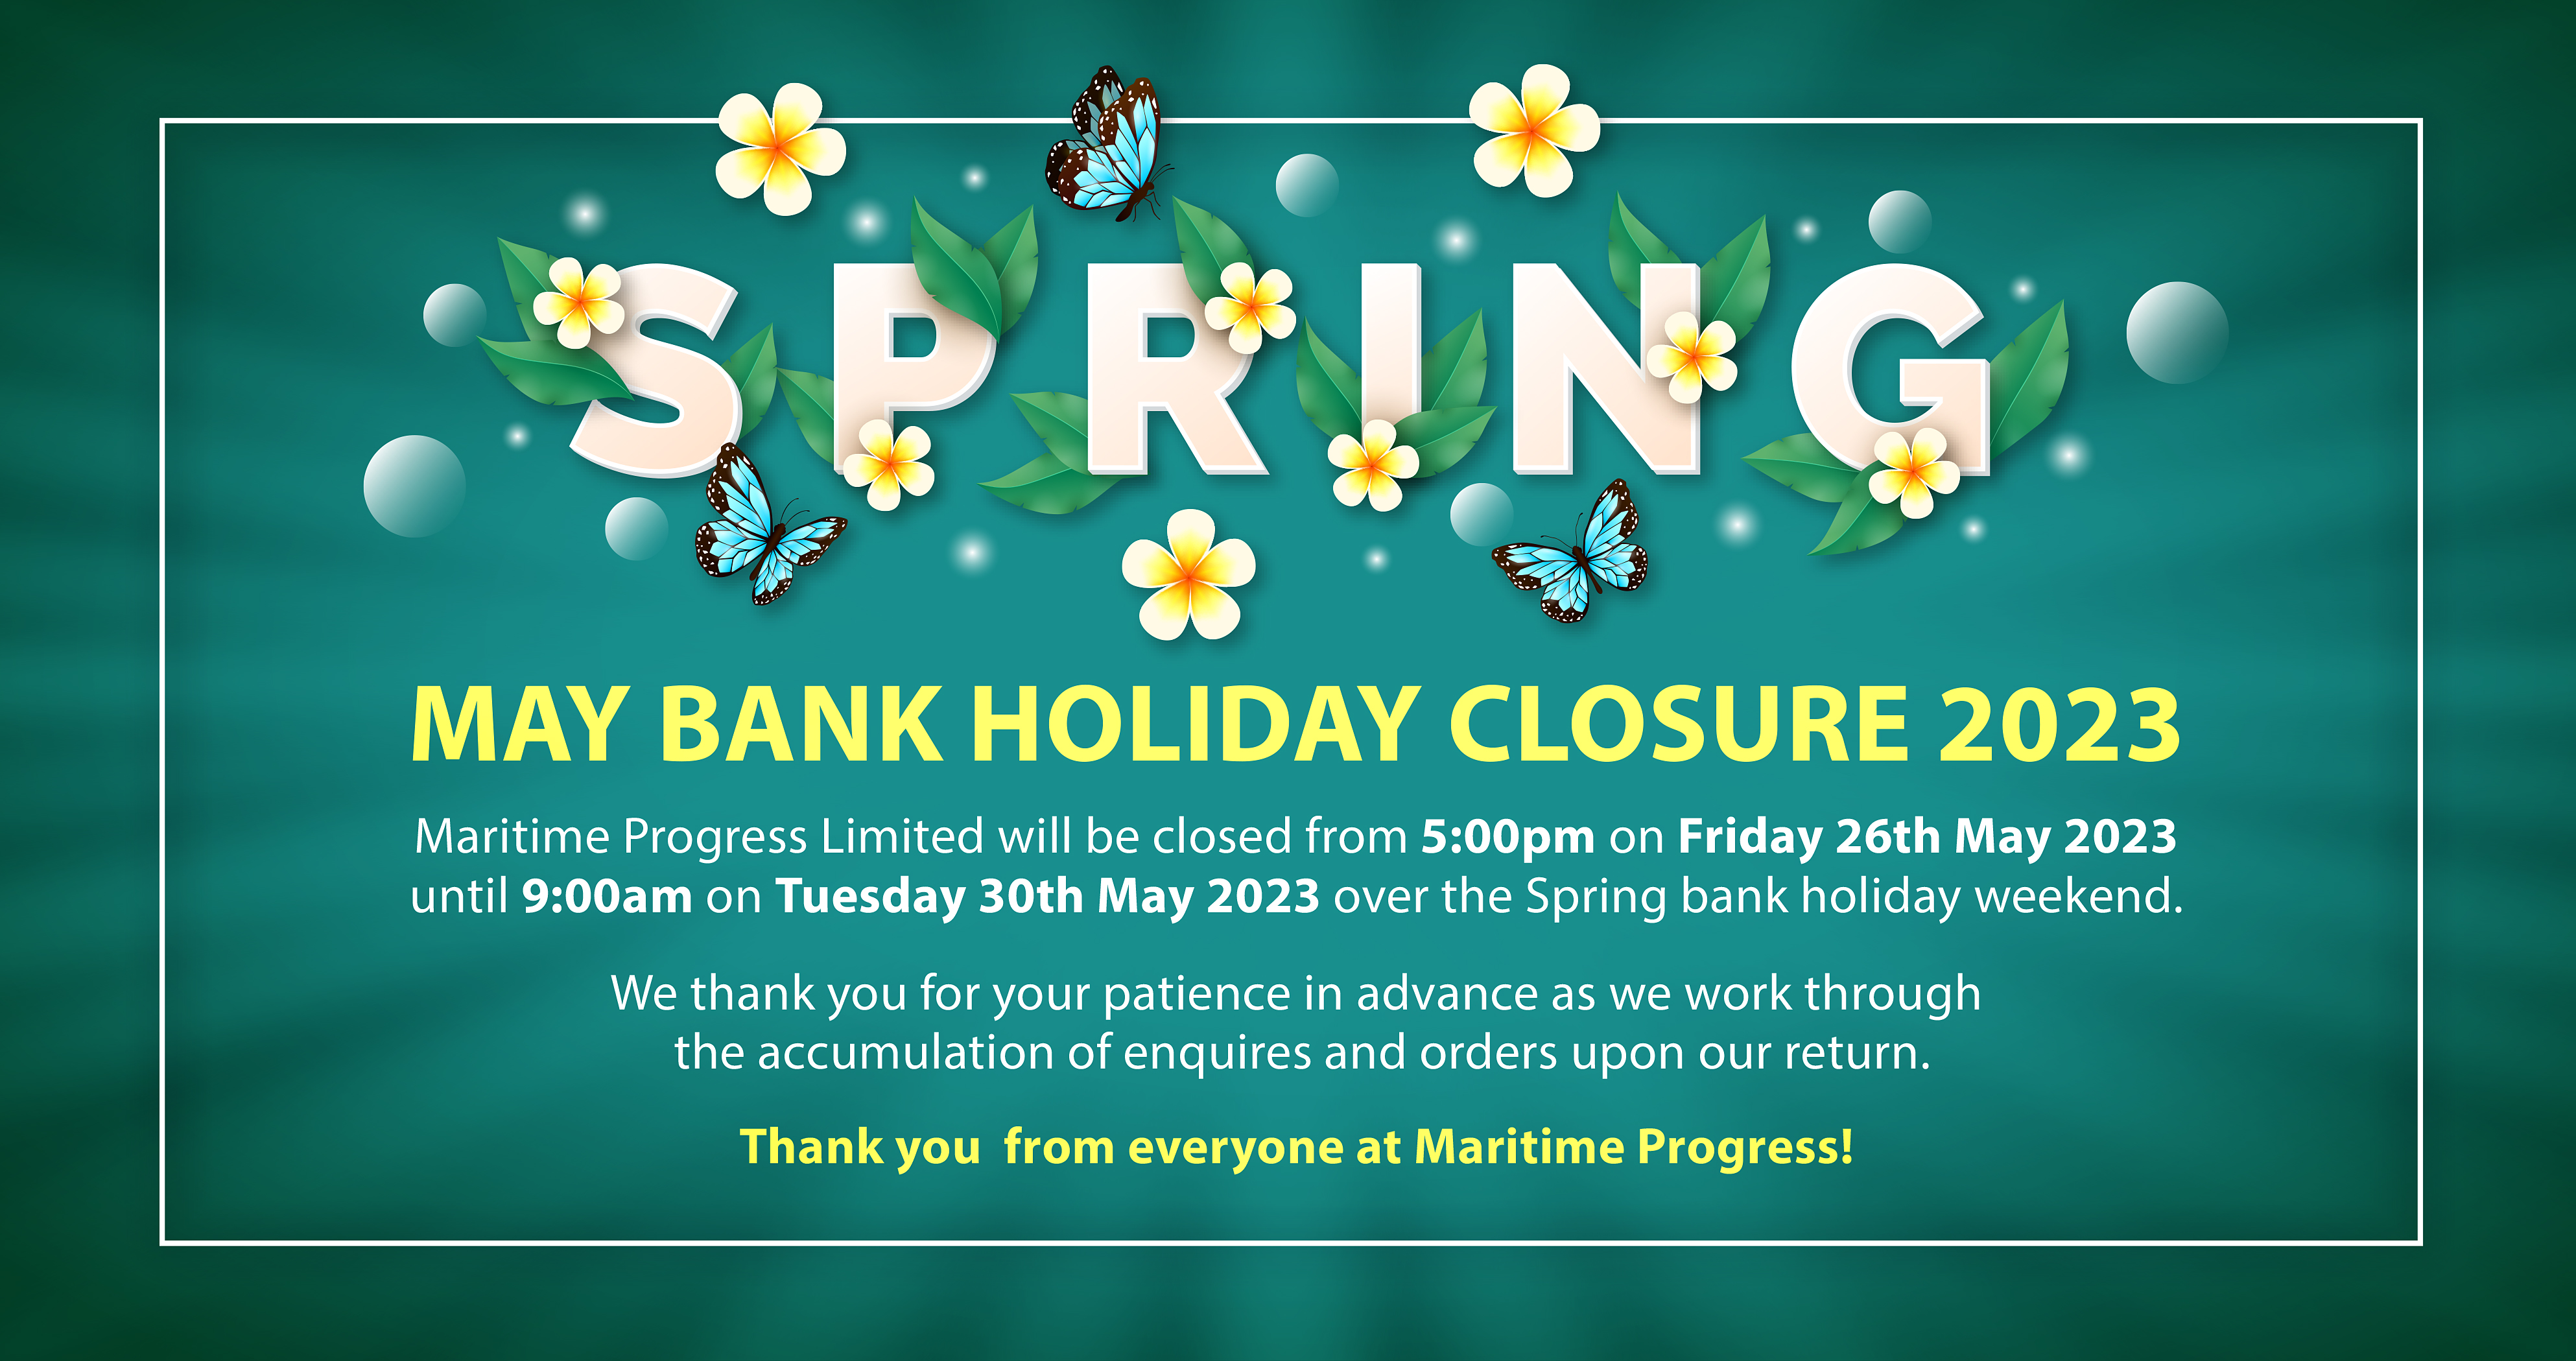 End of May Bank holiday advert